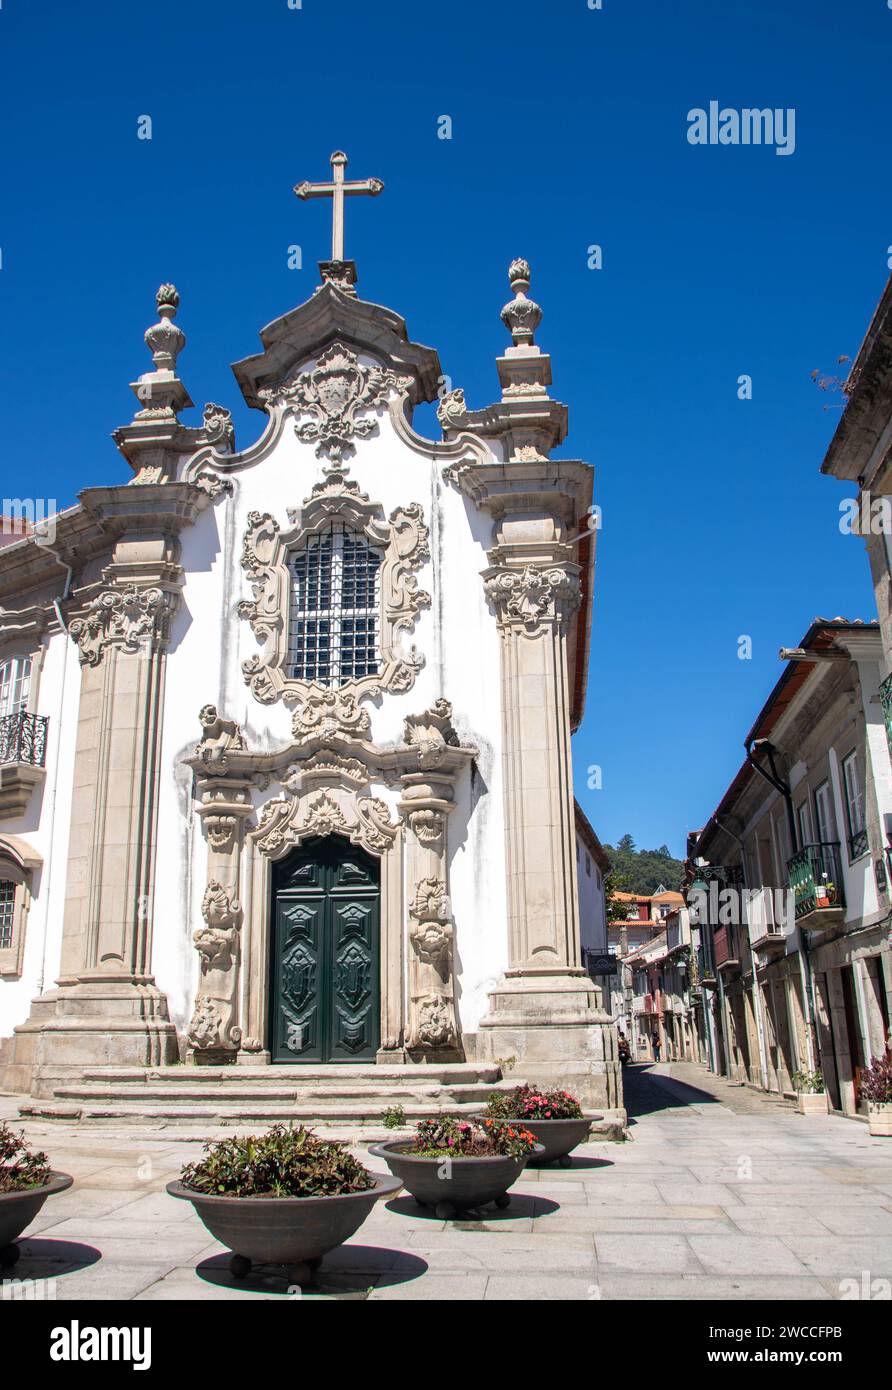 Capela das Malheiras , chapelle de Malheiras à Viana do Castelo dans le nord du Portugal Banque D'Images